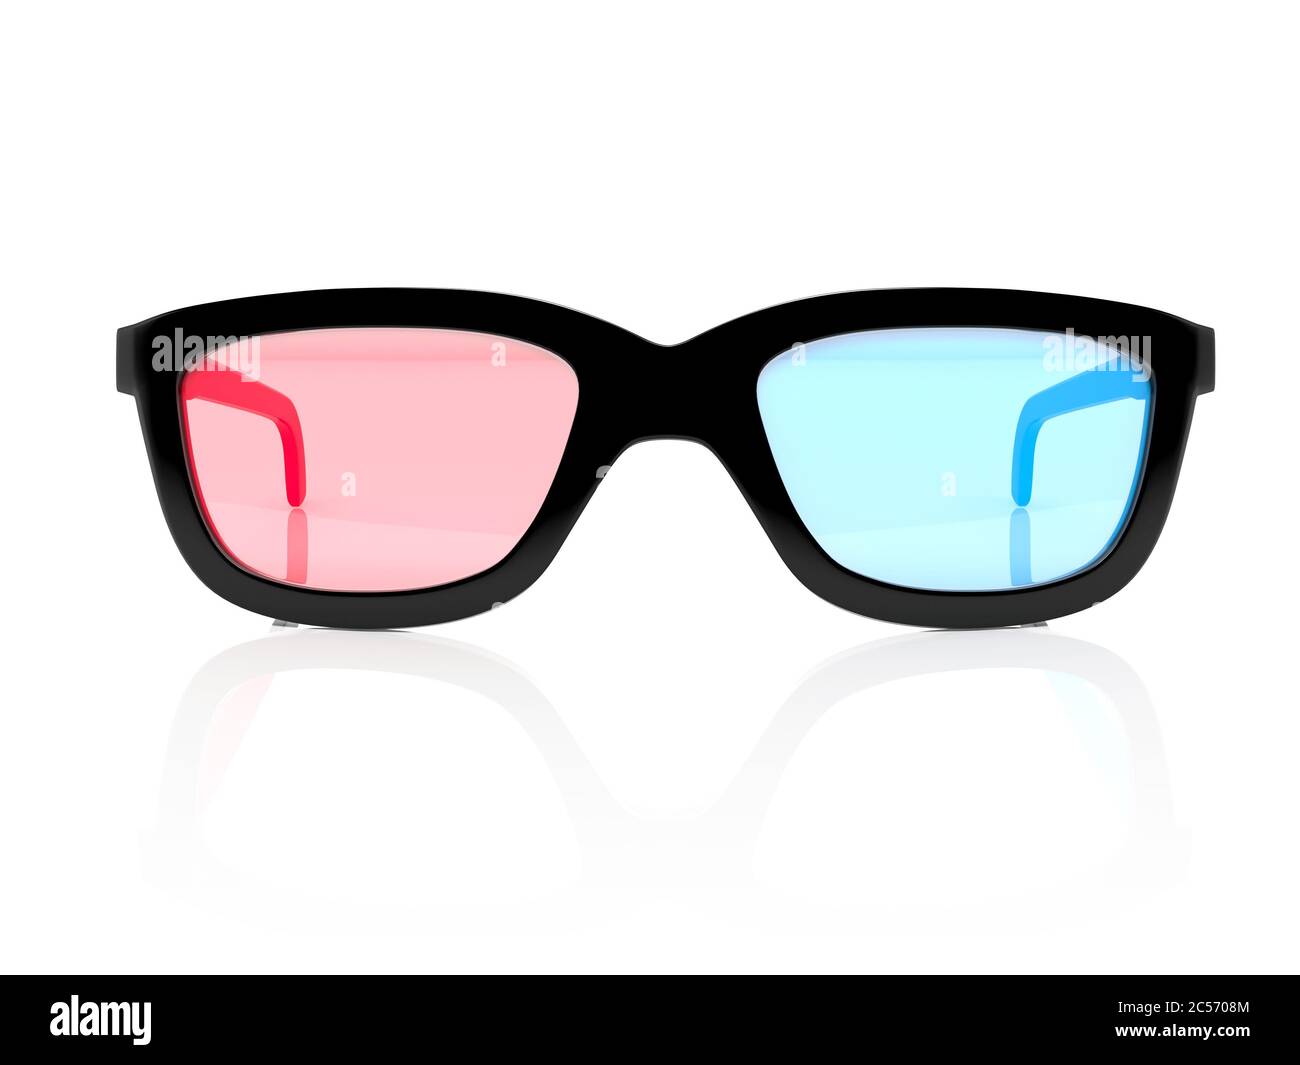 occhiali 3d. Occhiali rossi e blu per cinema Foto Stock